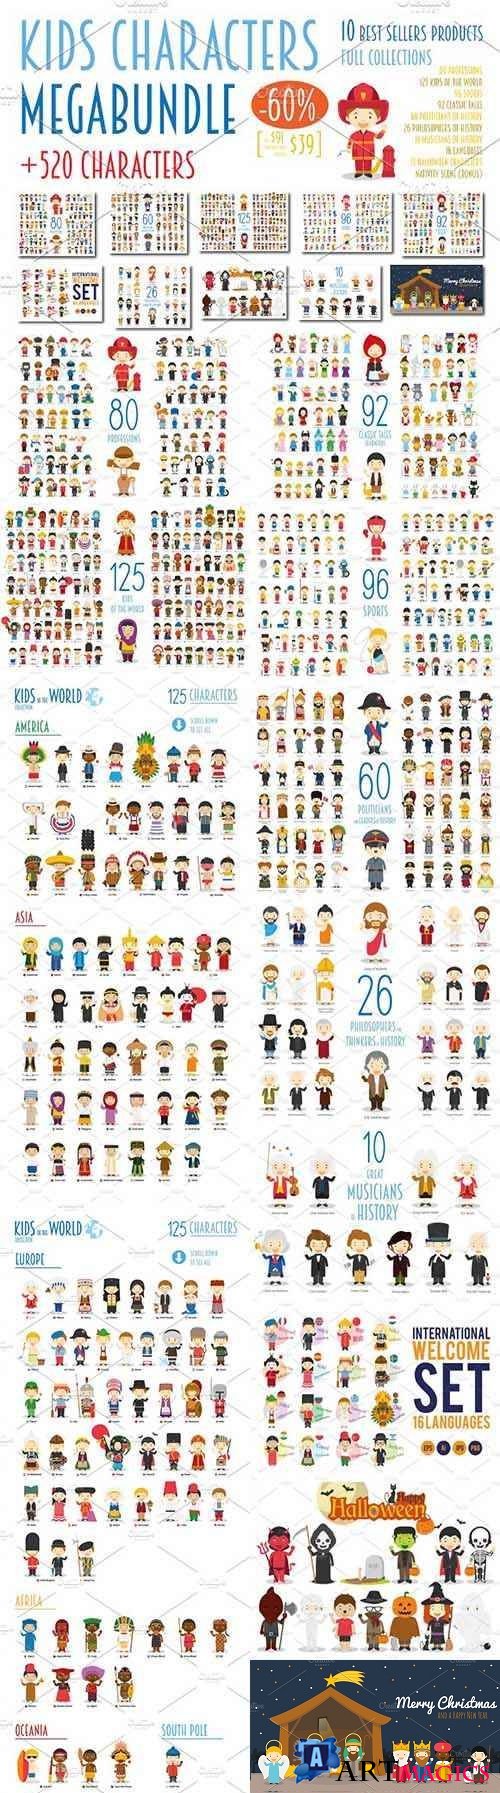 MEGABUNDLE Kids Characters Sets - 2381388